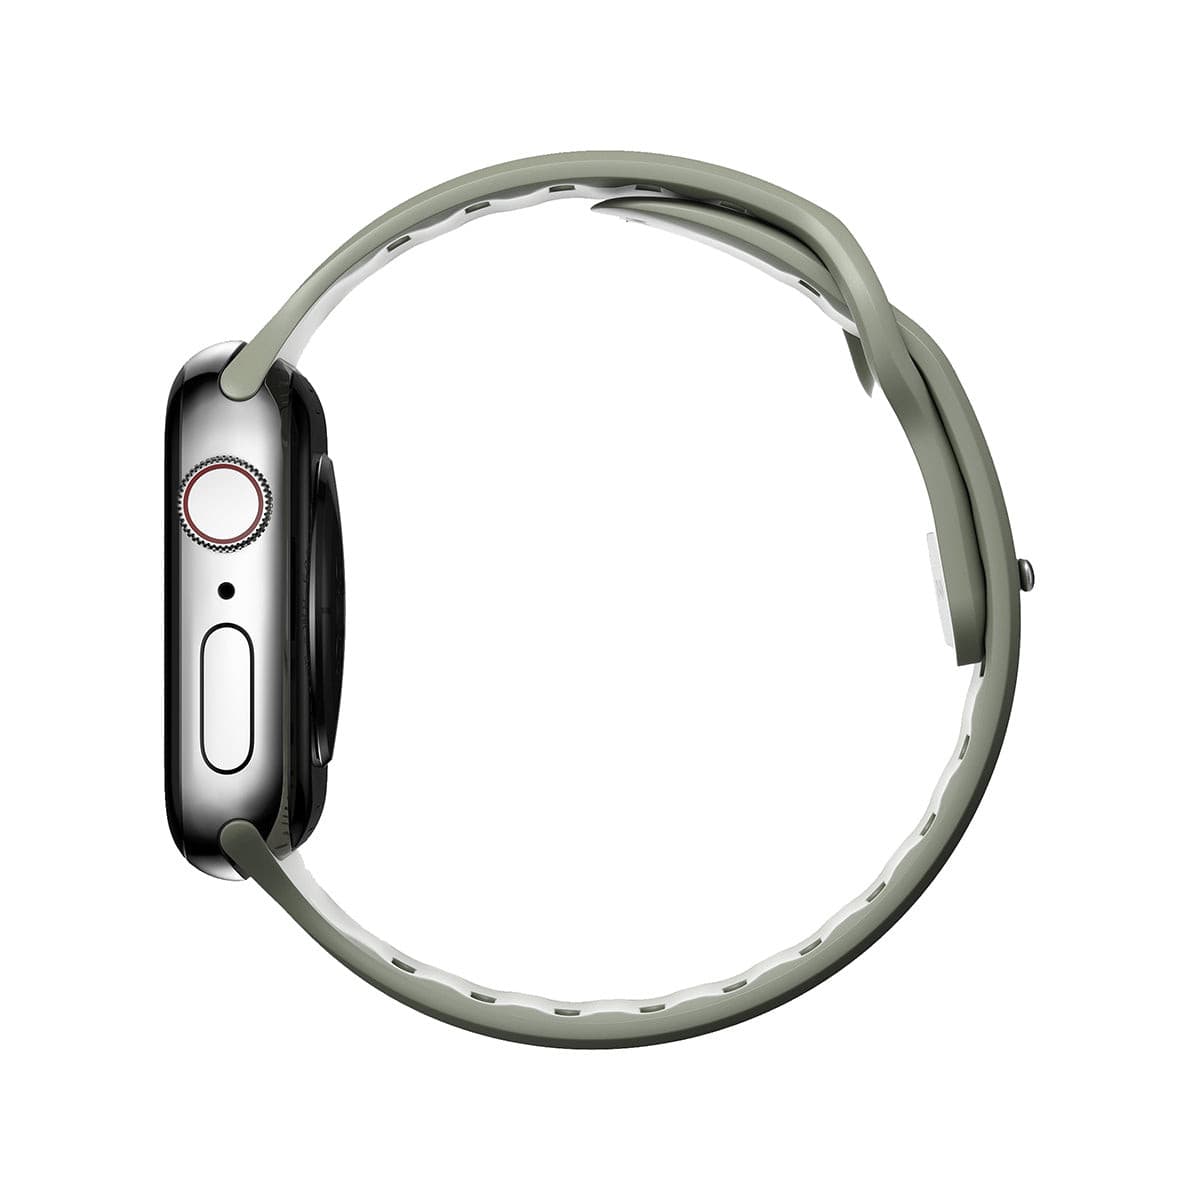 NOMAD Sport Slim 45mm Band for Apple Watch - Sage.